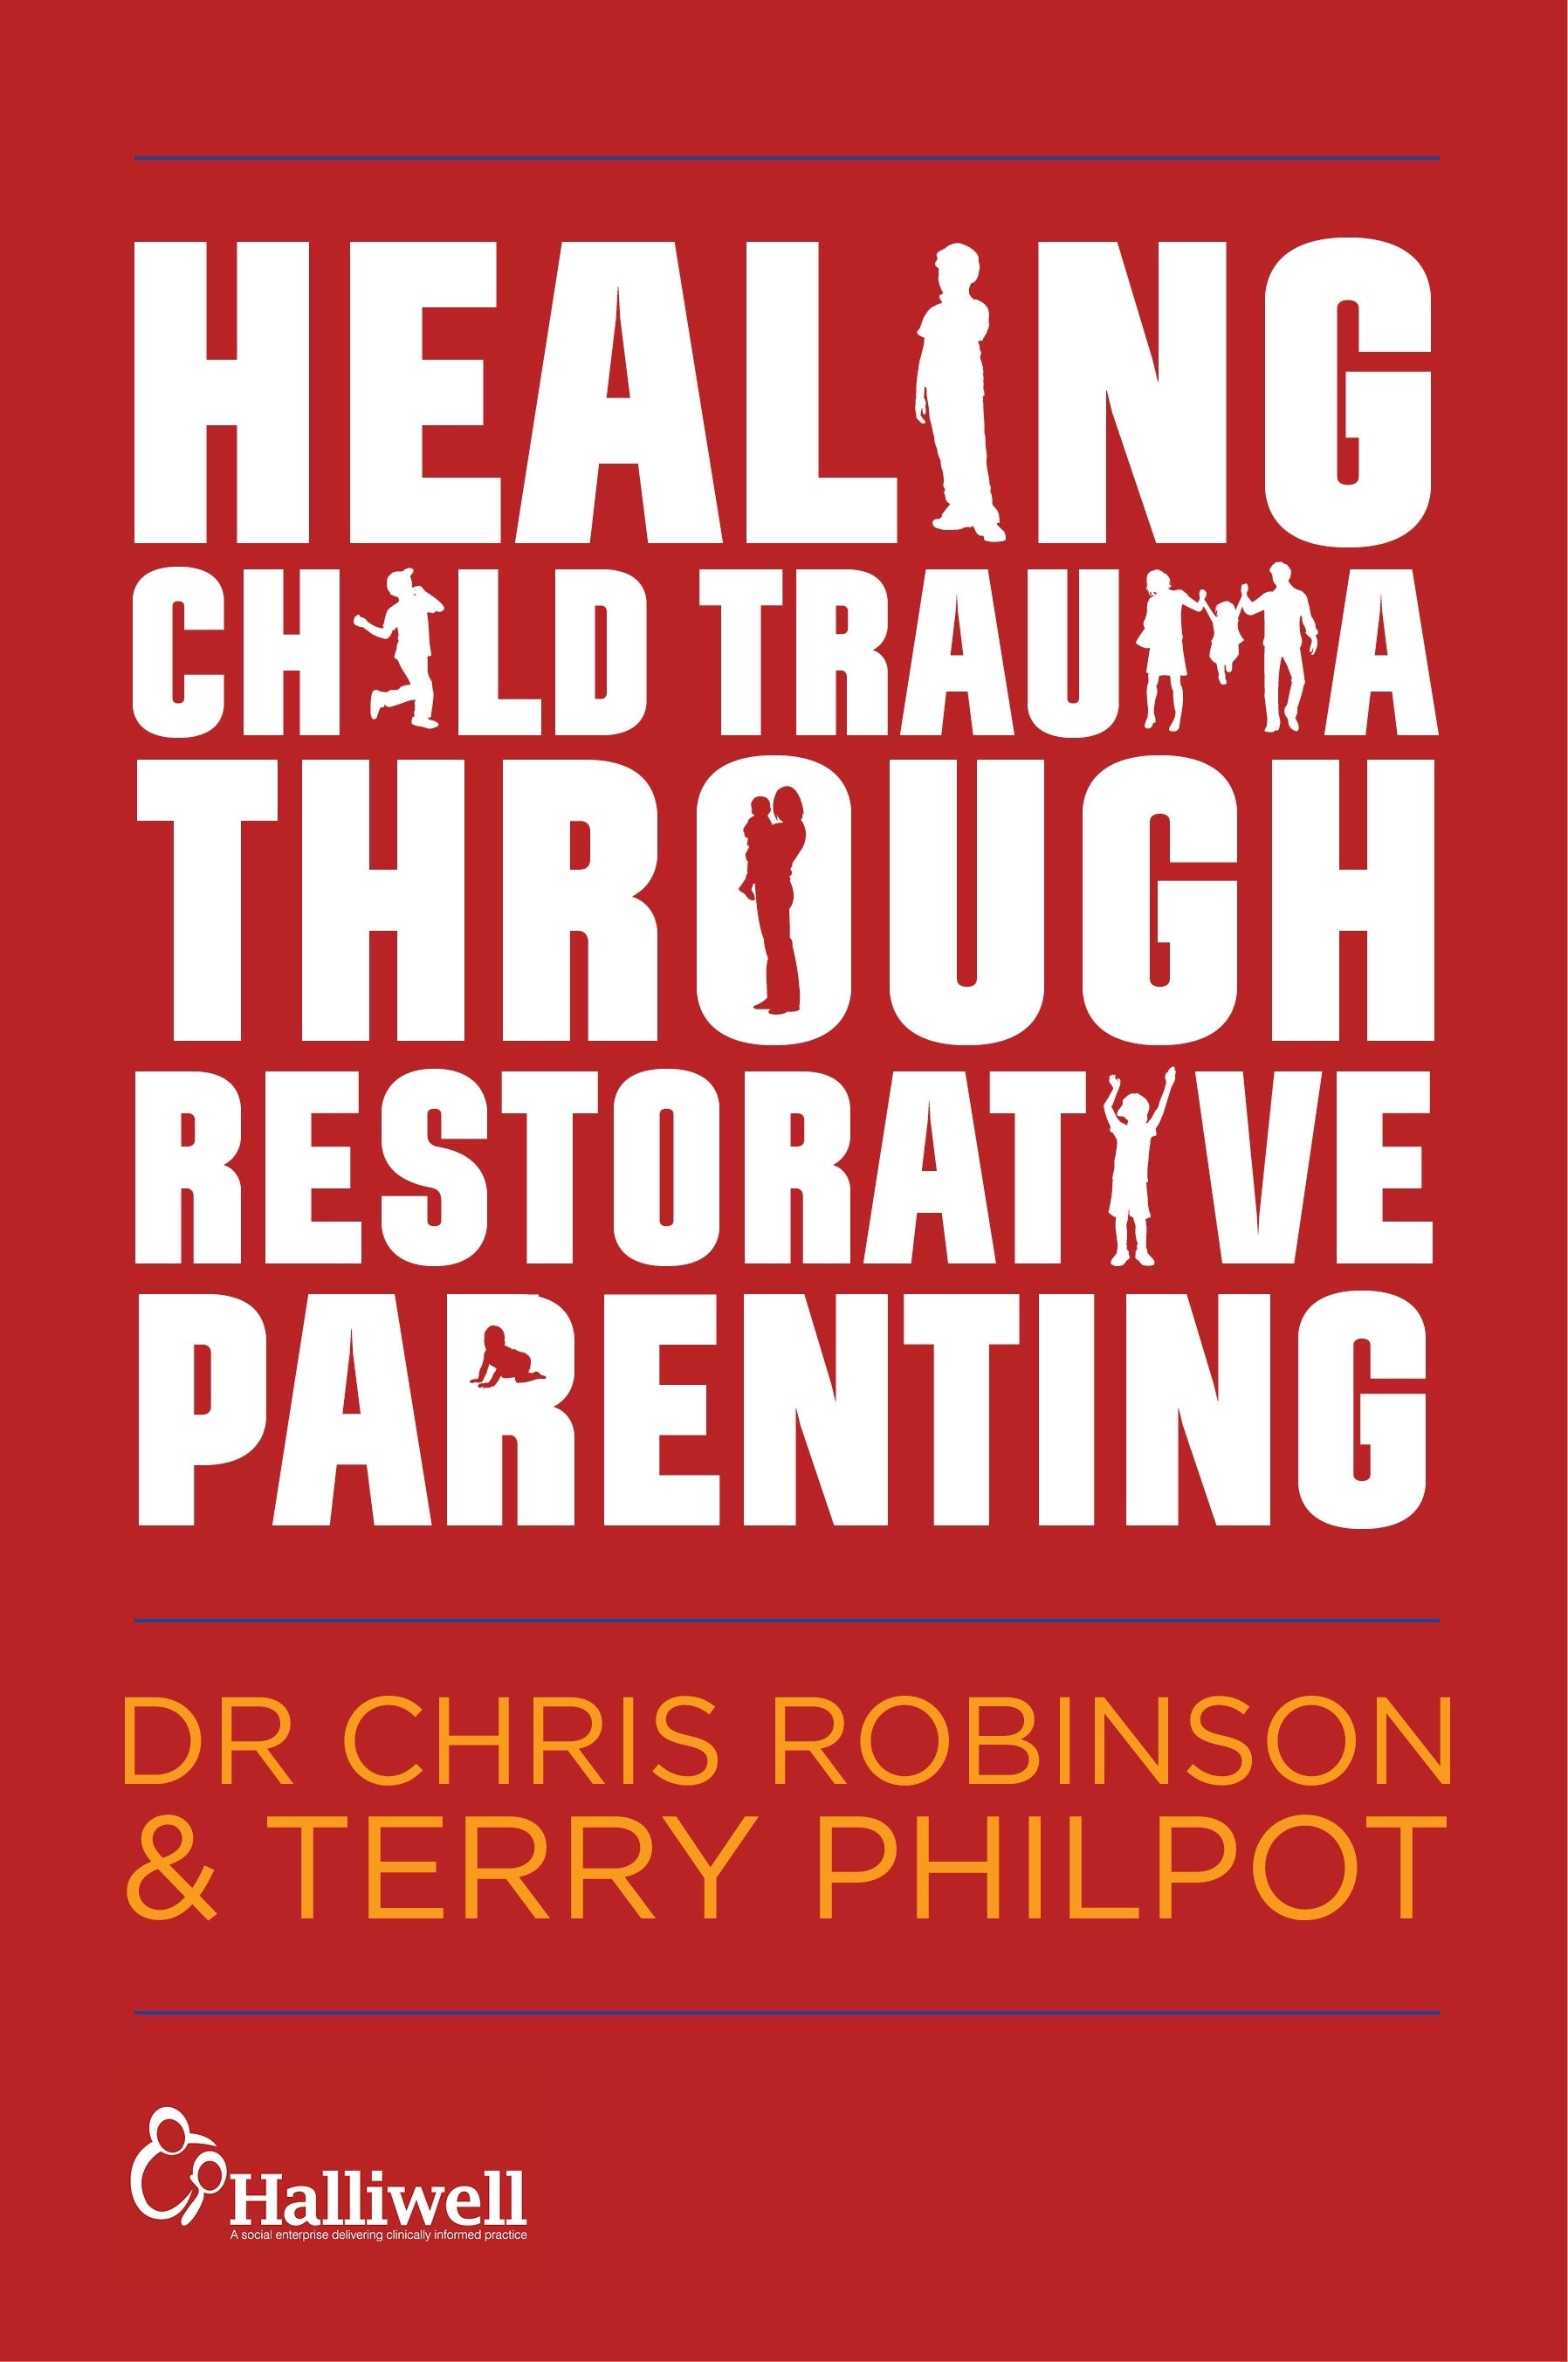 Healing Child Trauma Through Restorative Parenting by Andrew Constable, Karen Mitchell-Mellor, Terry Philpot, Chris Robinson